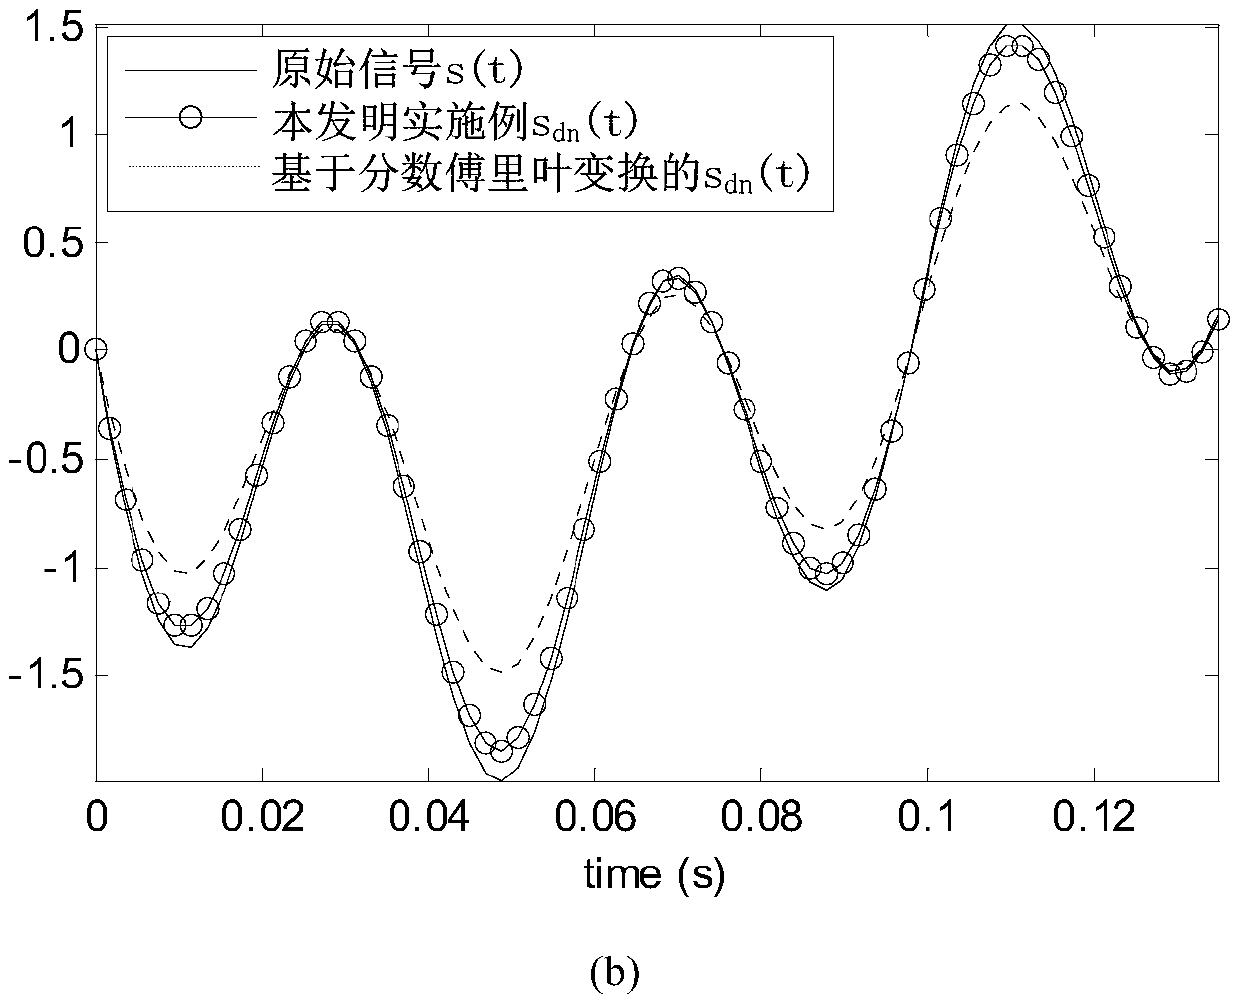 A Denoising Method of Multi-component LFM Signal Based on Lu Distribution